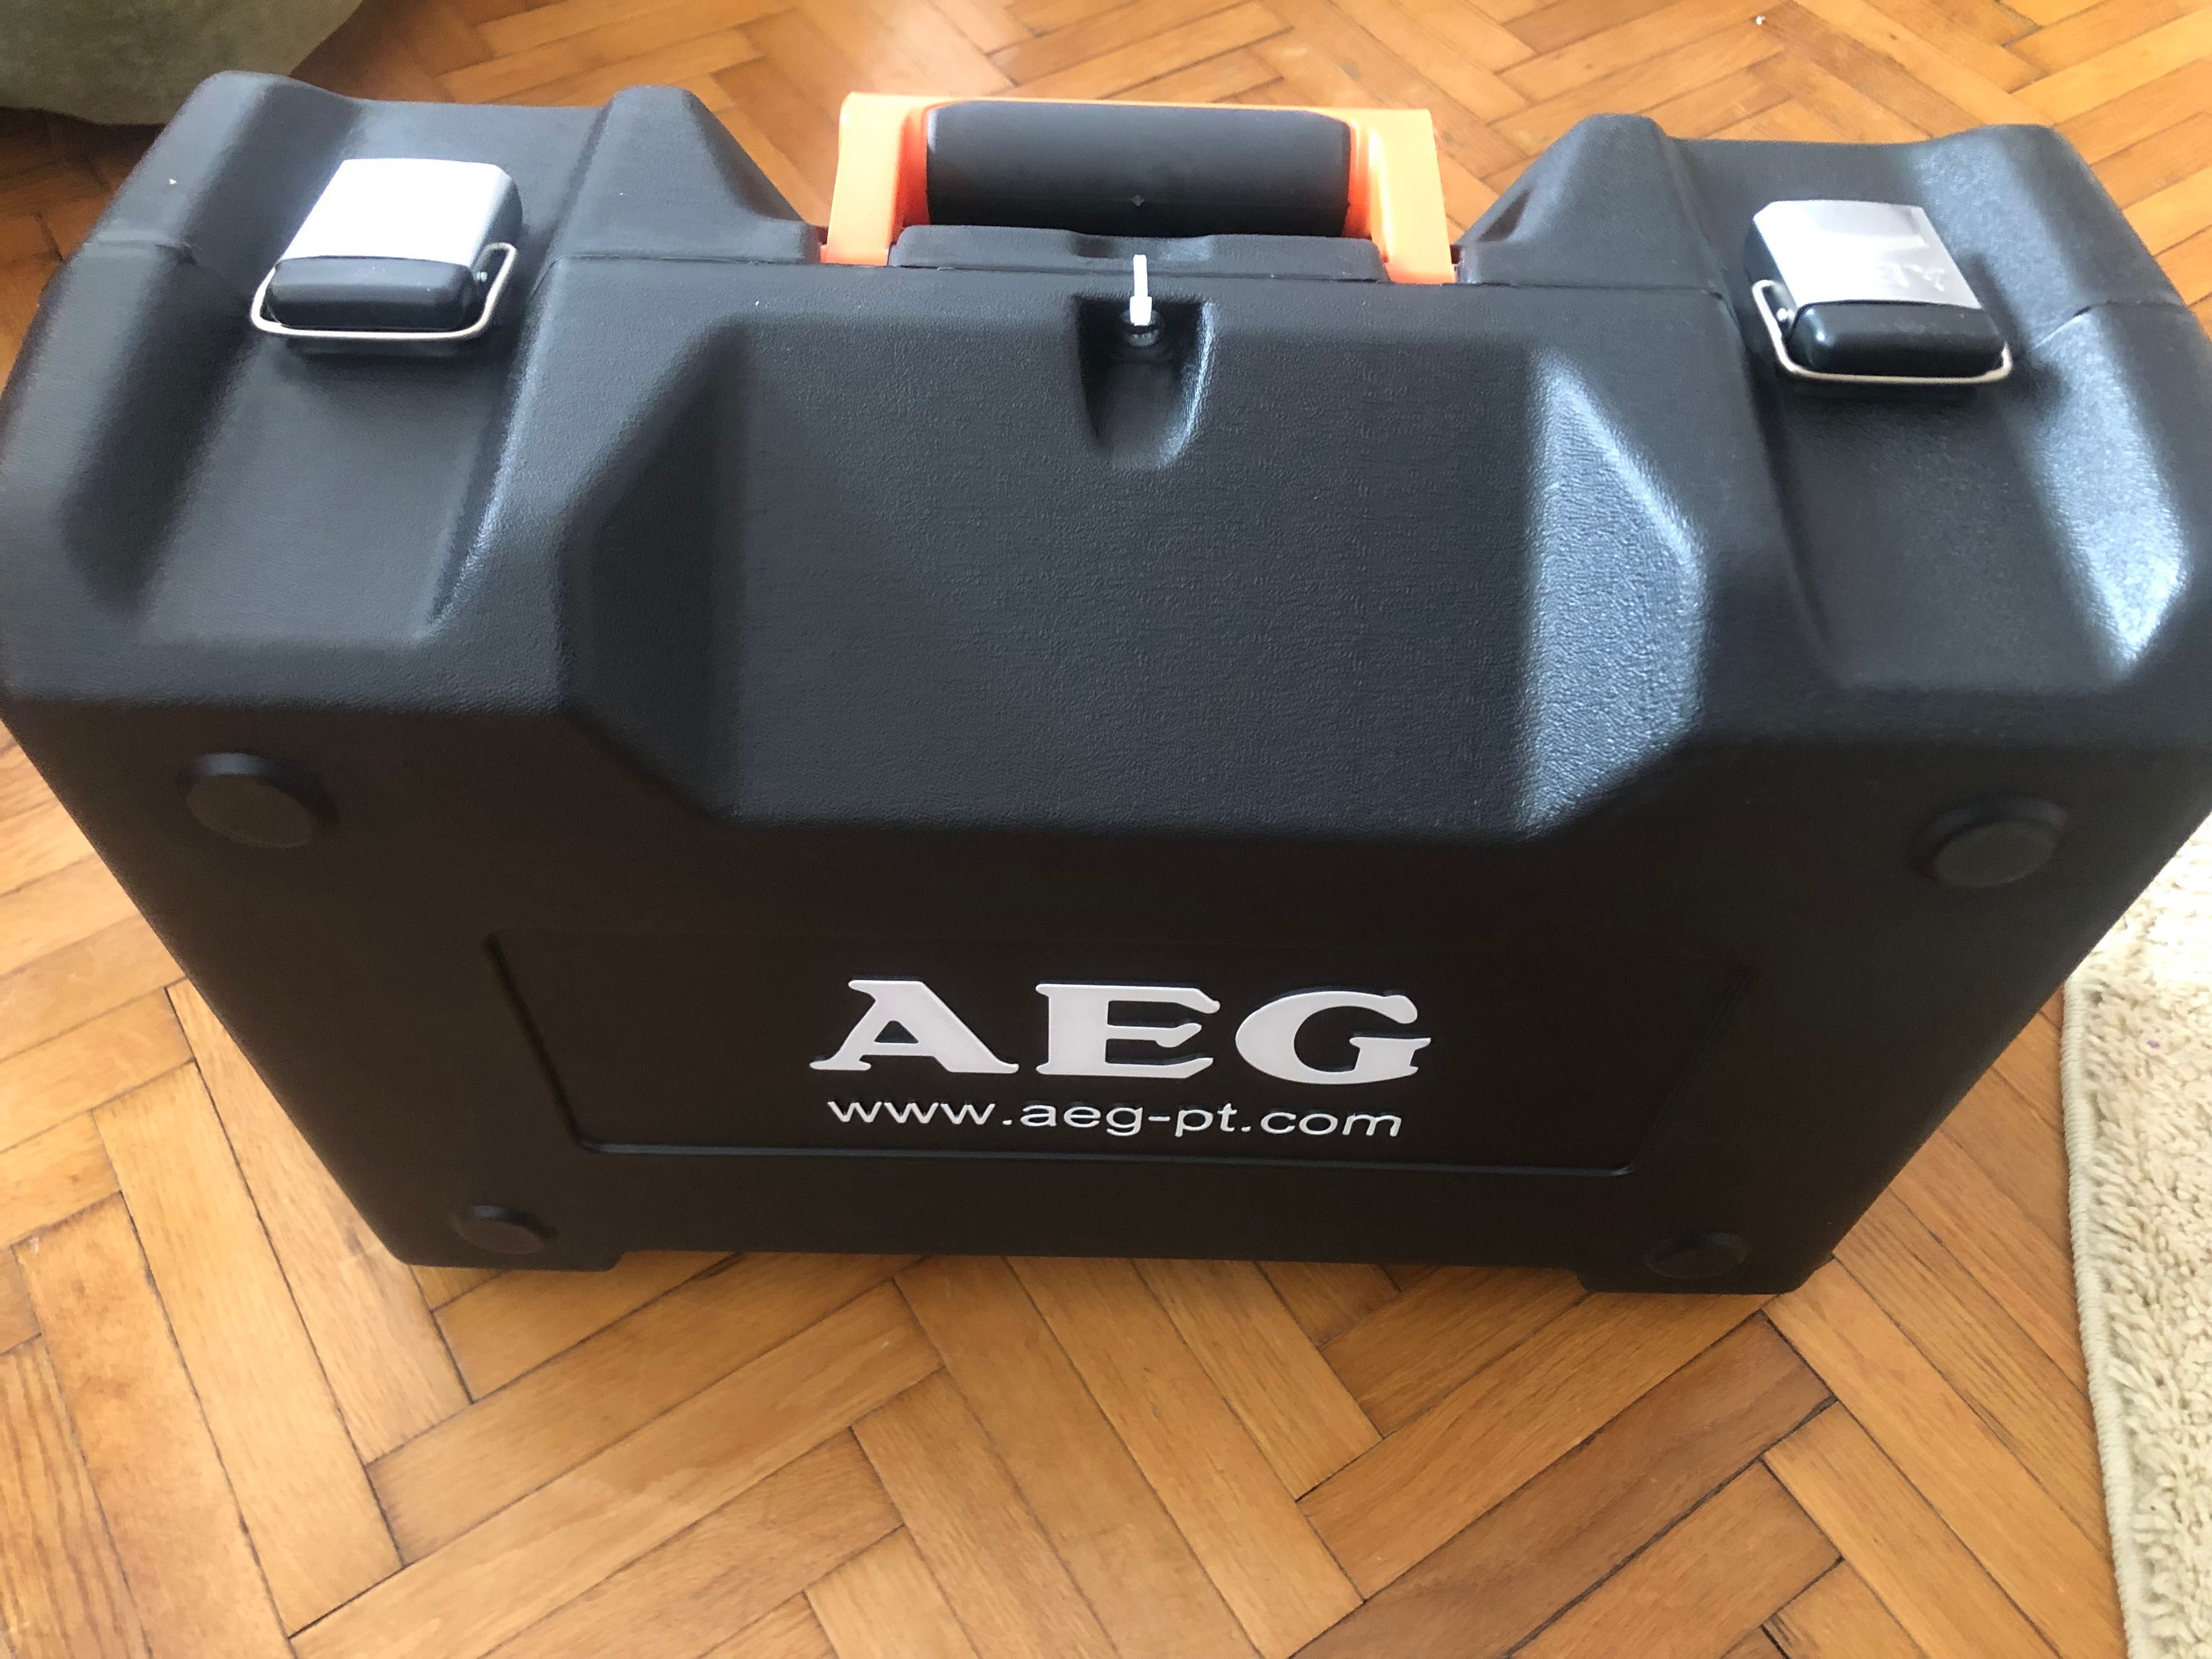 Slefuitor Orbital AEG EX 150 ES, nou sigilat, geanta de transport AEG